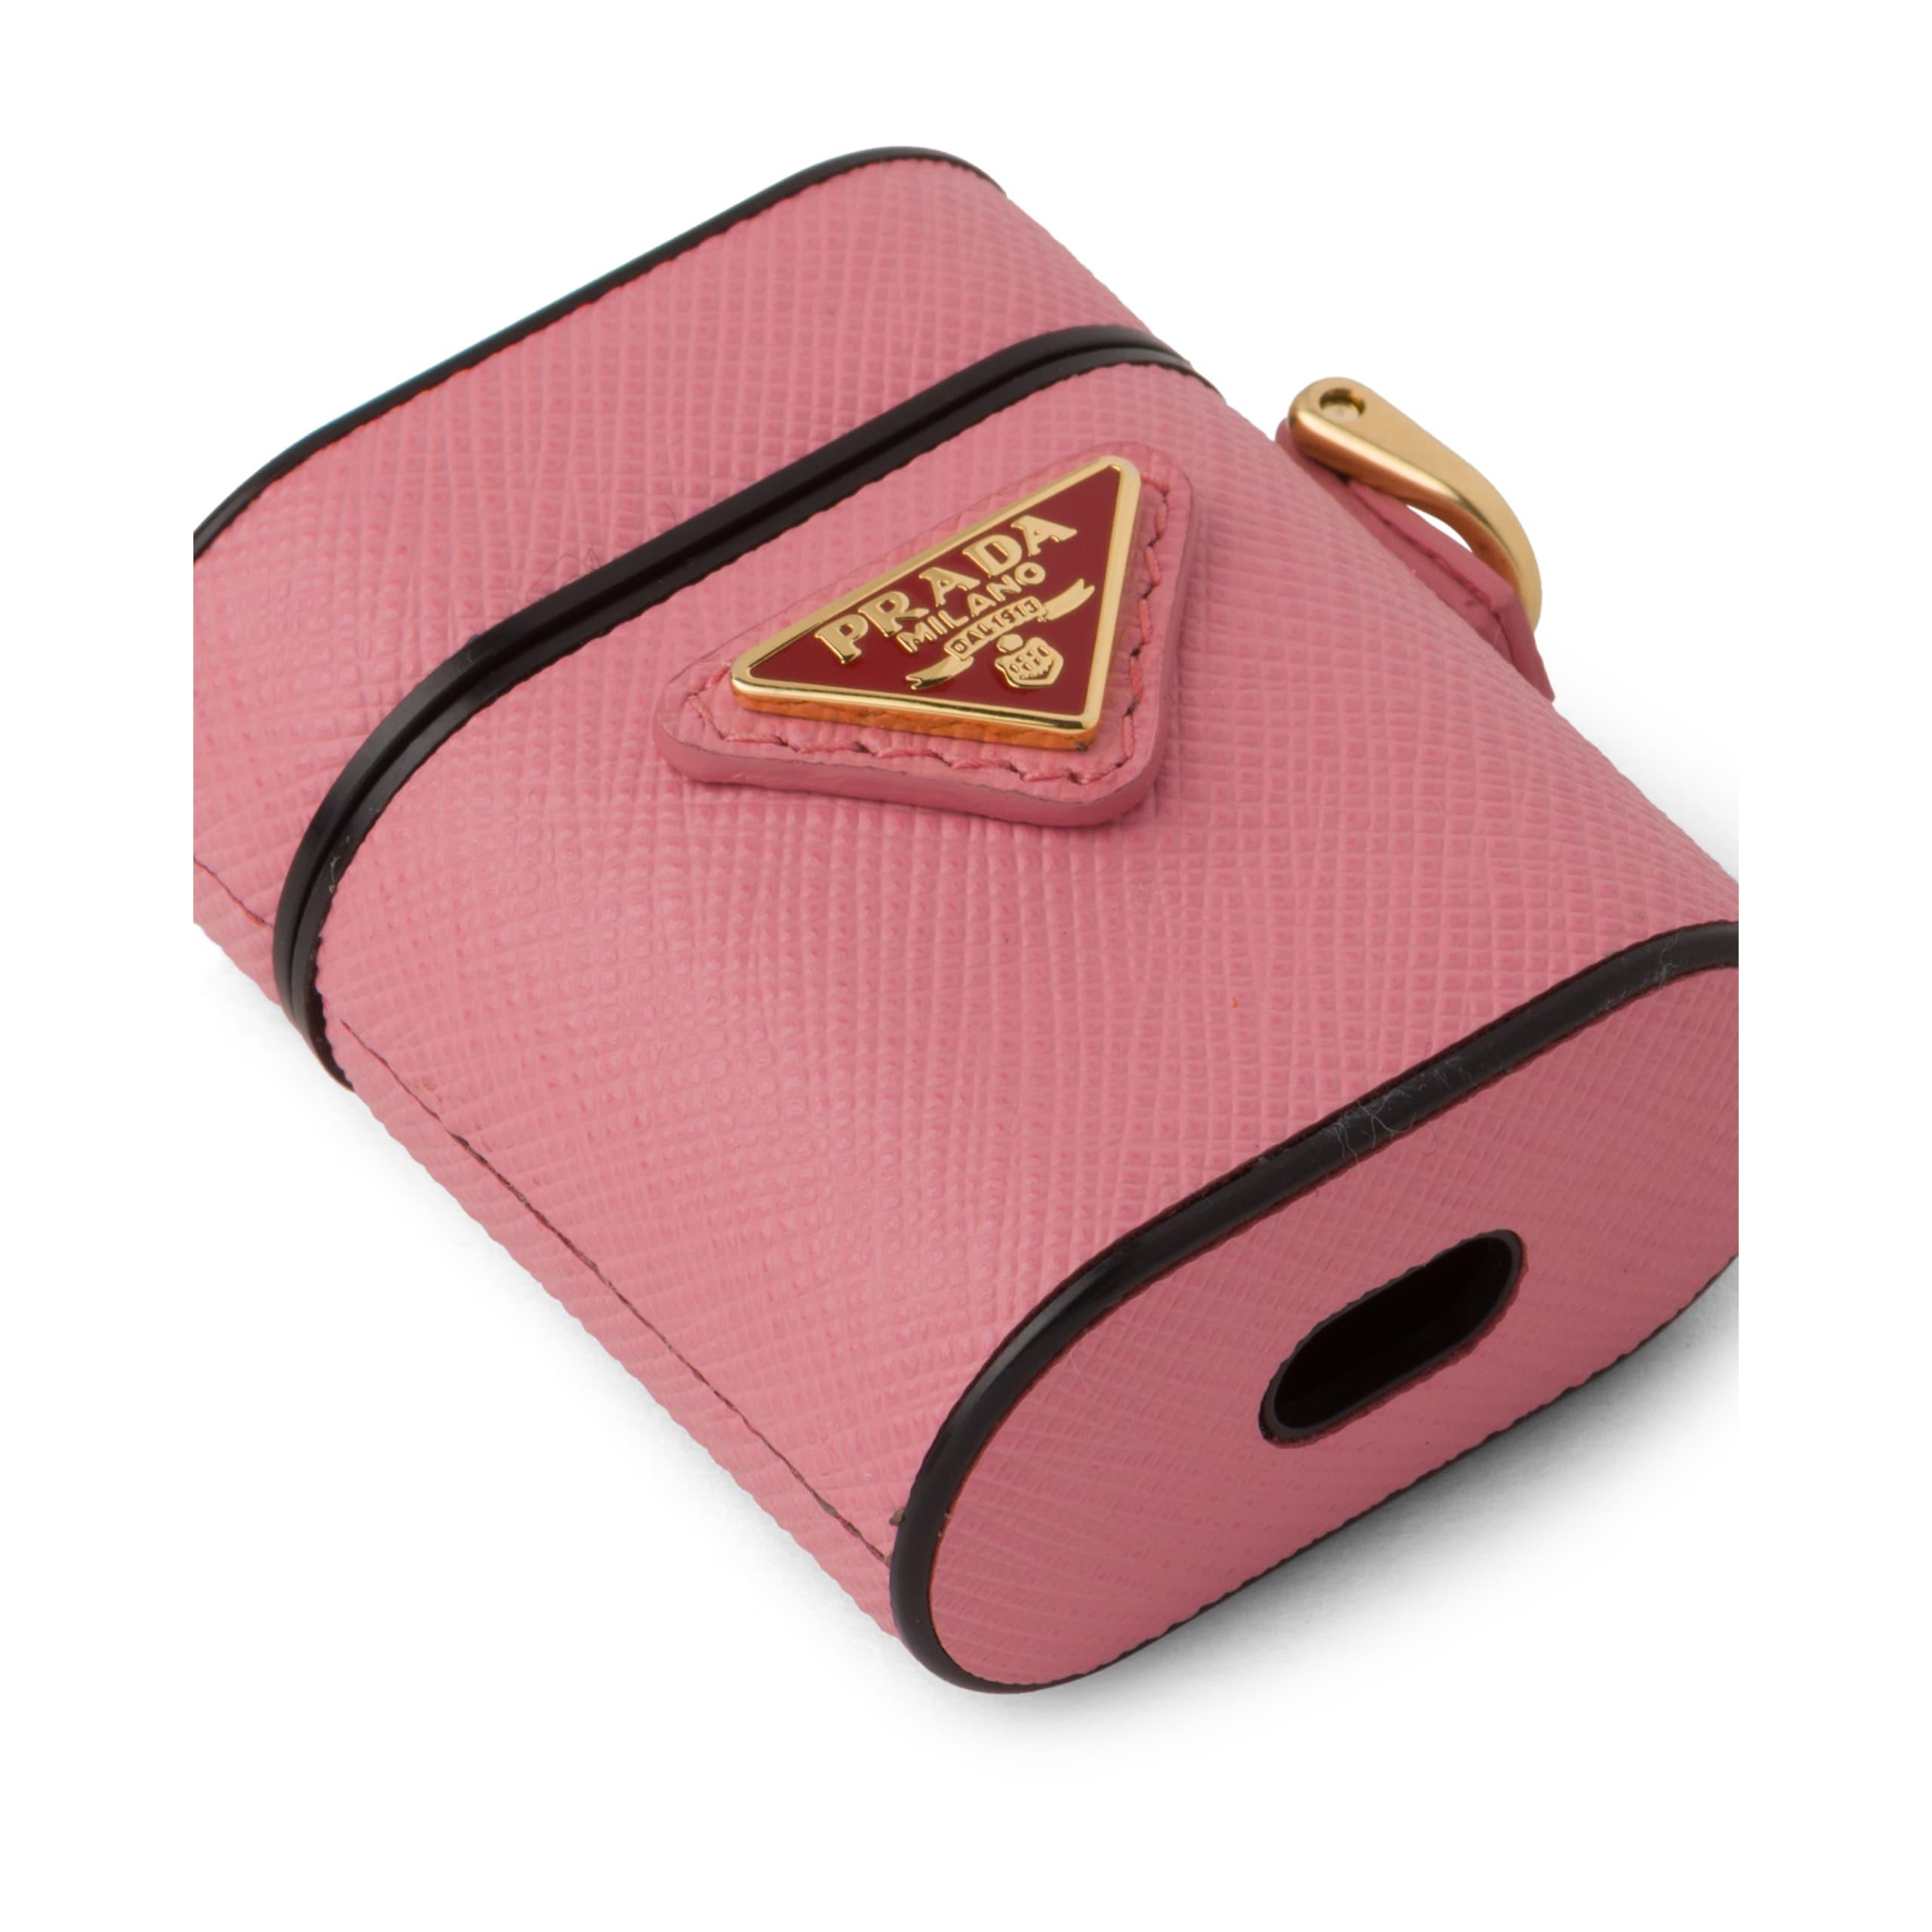 Prada Saffiano Leather Airpods Case in Pink